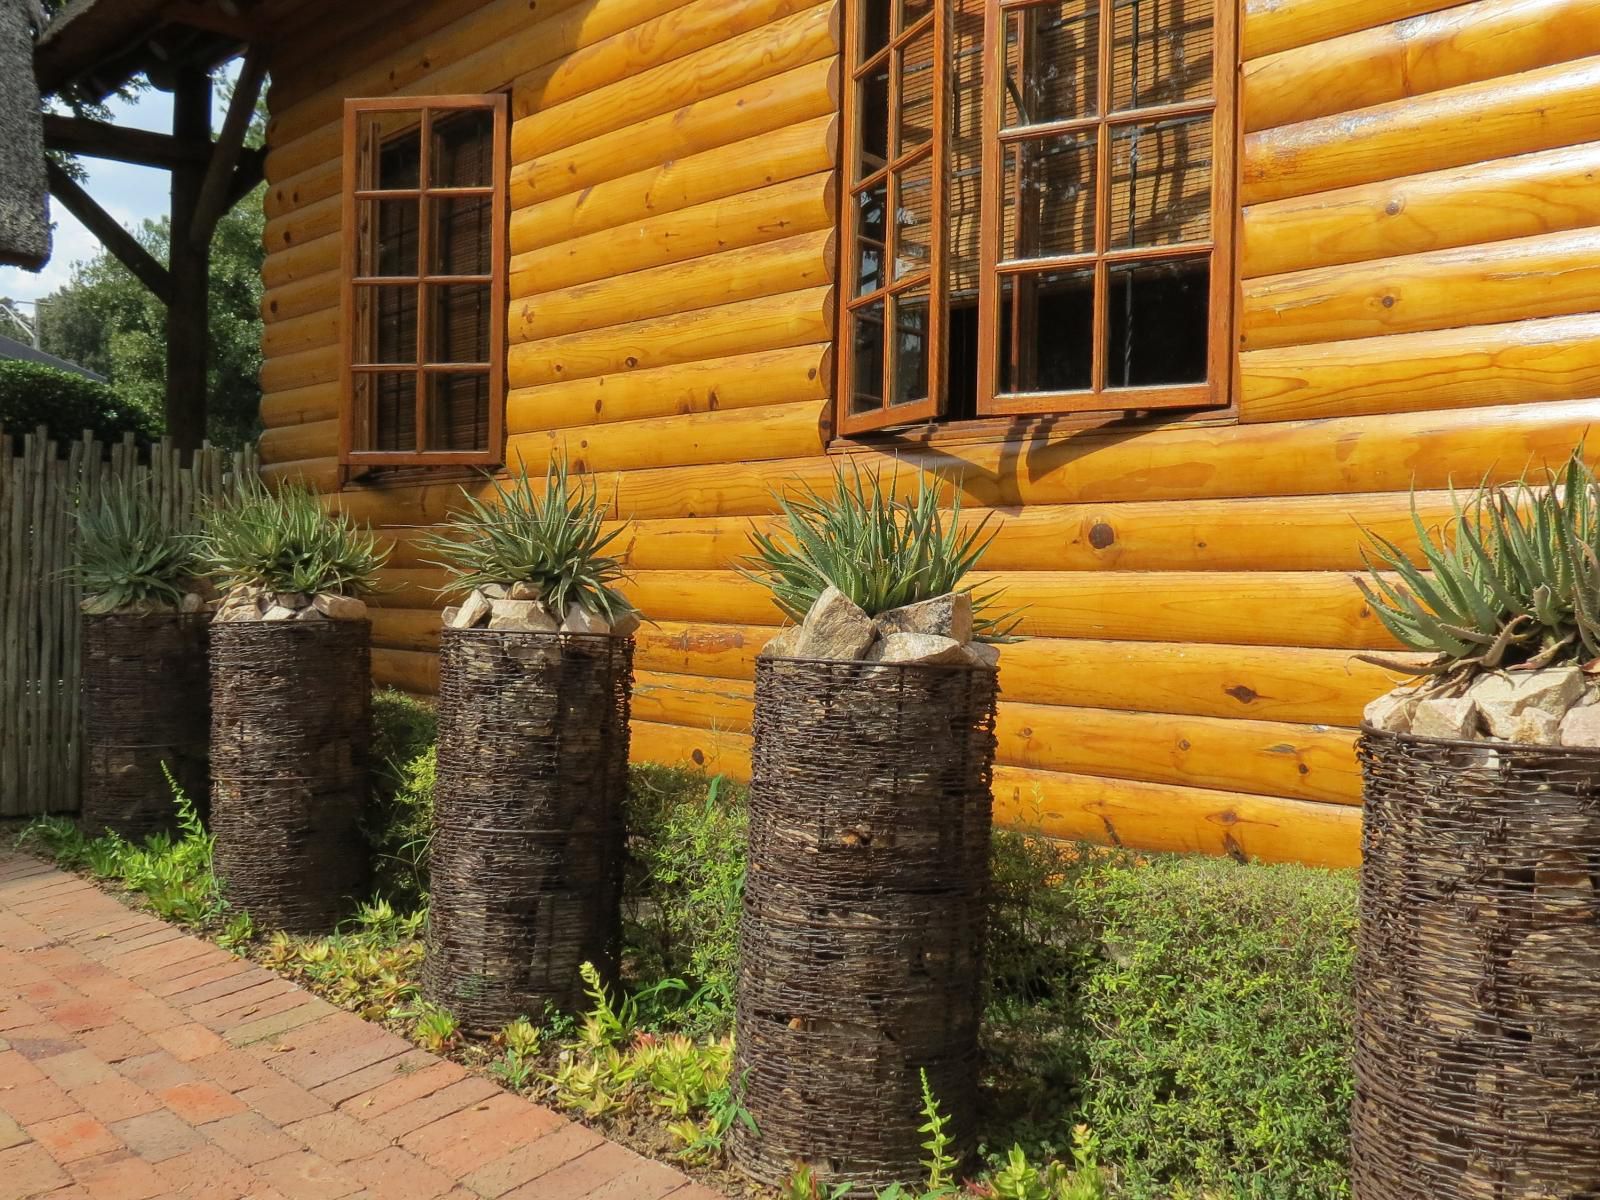 Ciara Lodge Rietfontein Pretoria Tshwane Gauteng South Africa Cabin, Building, Architecture, Plant, Nature